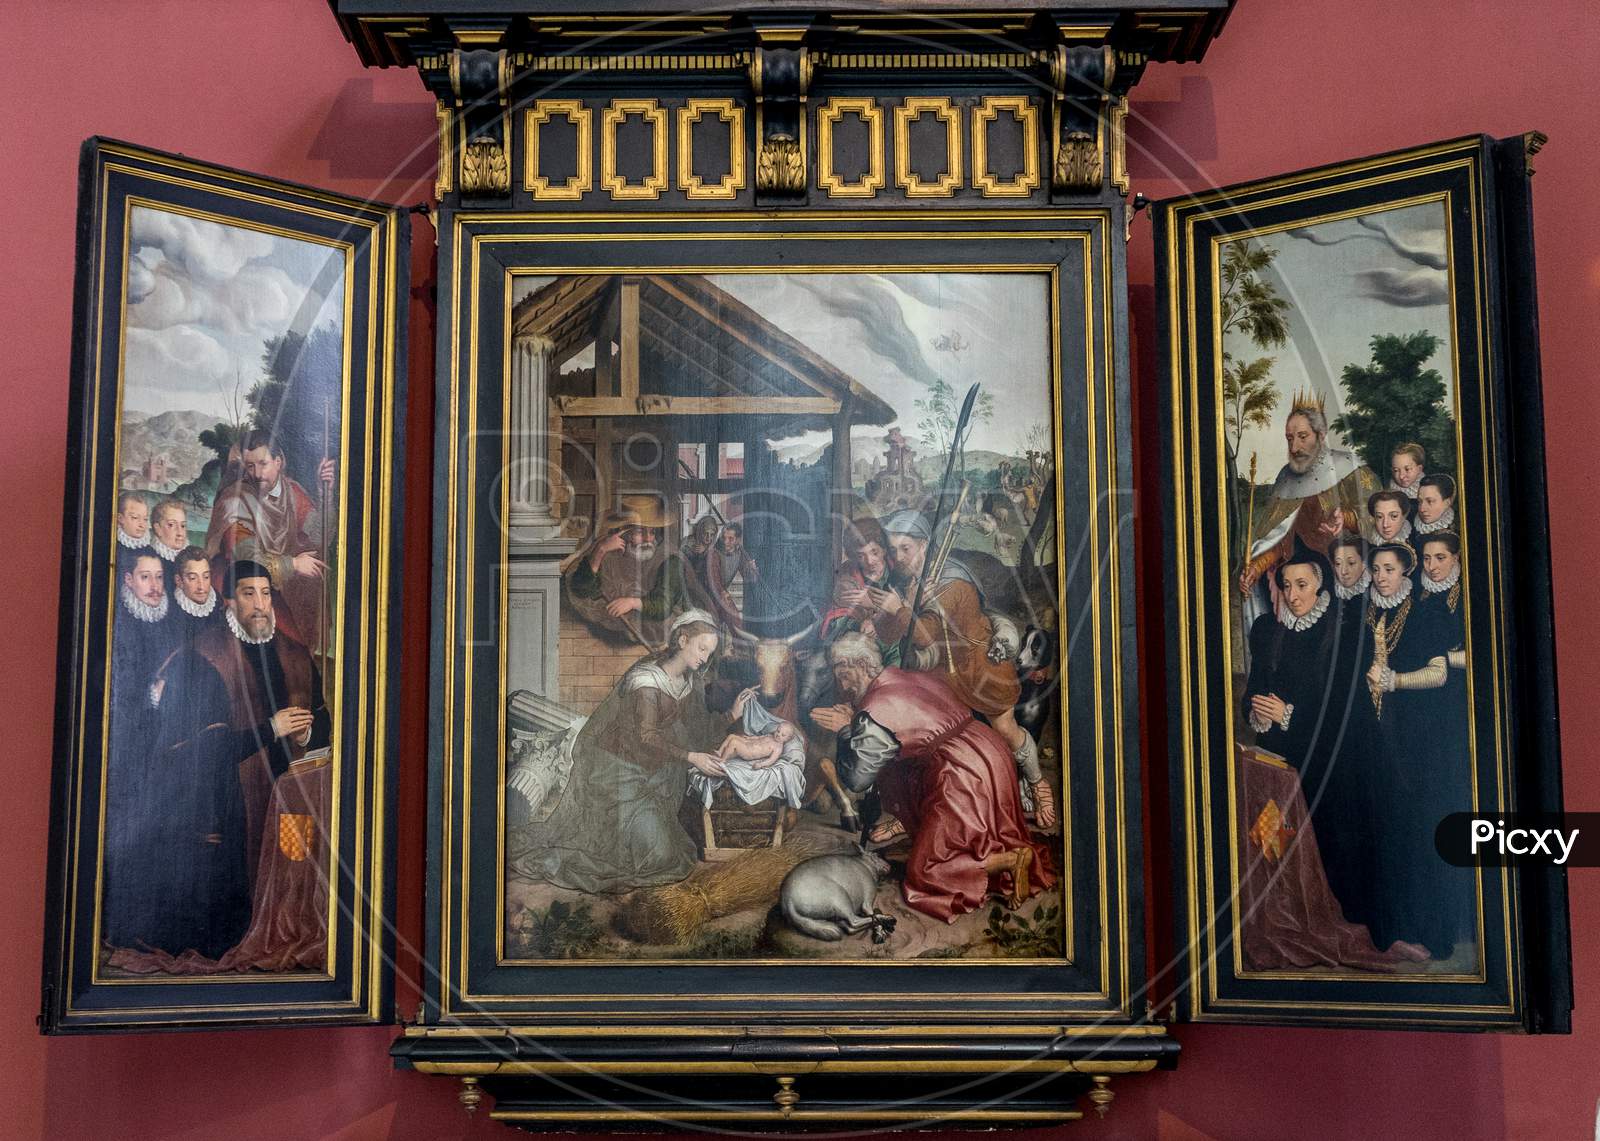 Bruges, Belgium - 16 April 2017: A Painting Showing The Birth Of Jesus Christ, Brugge, Belgium